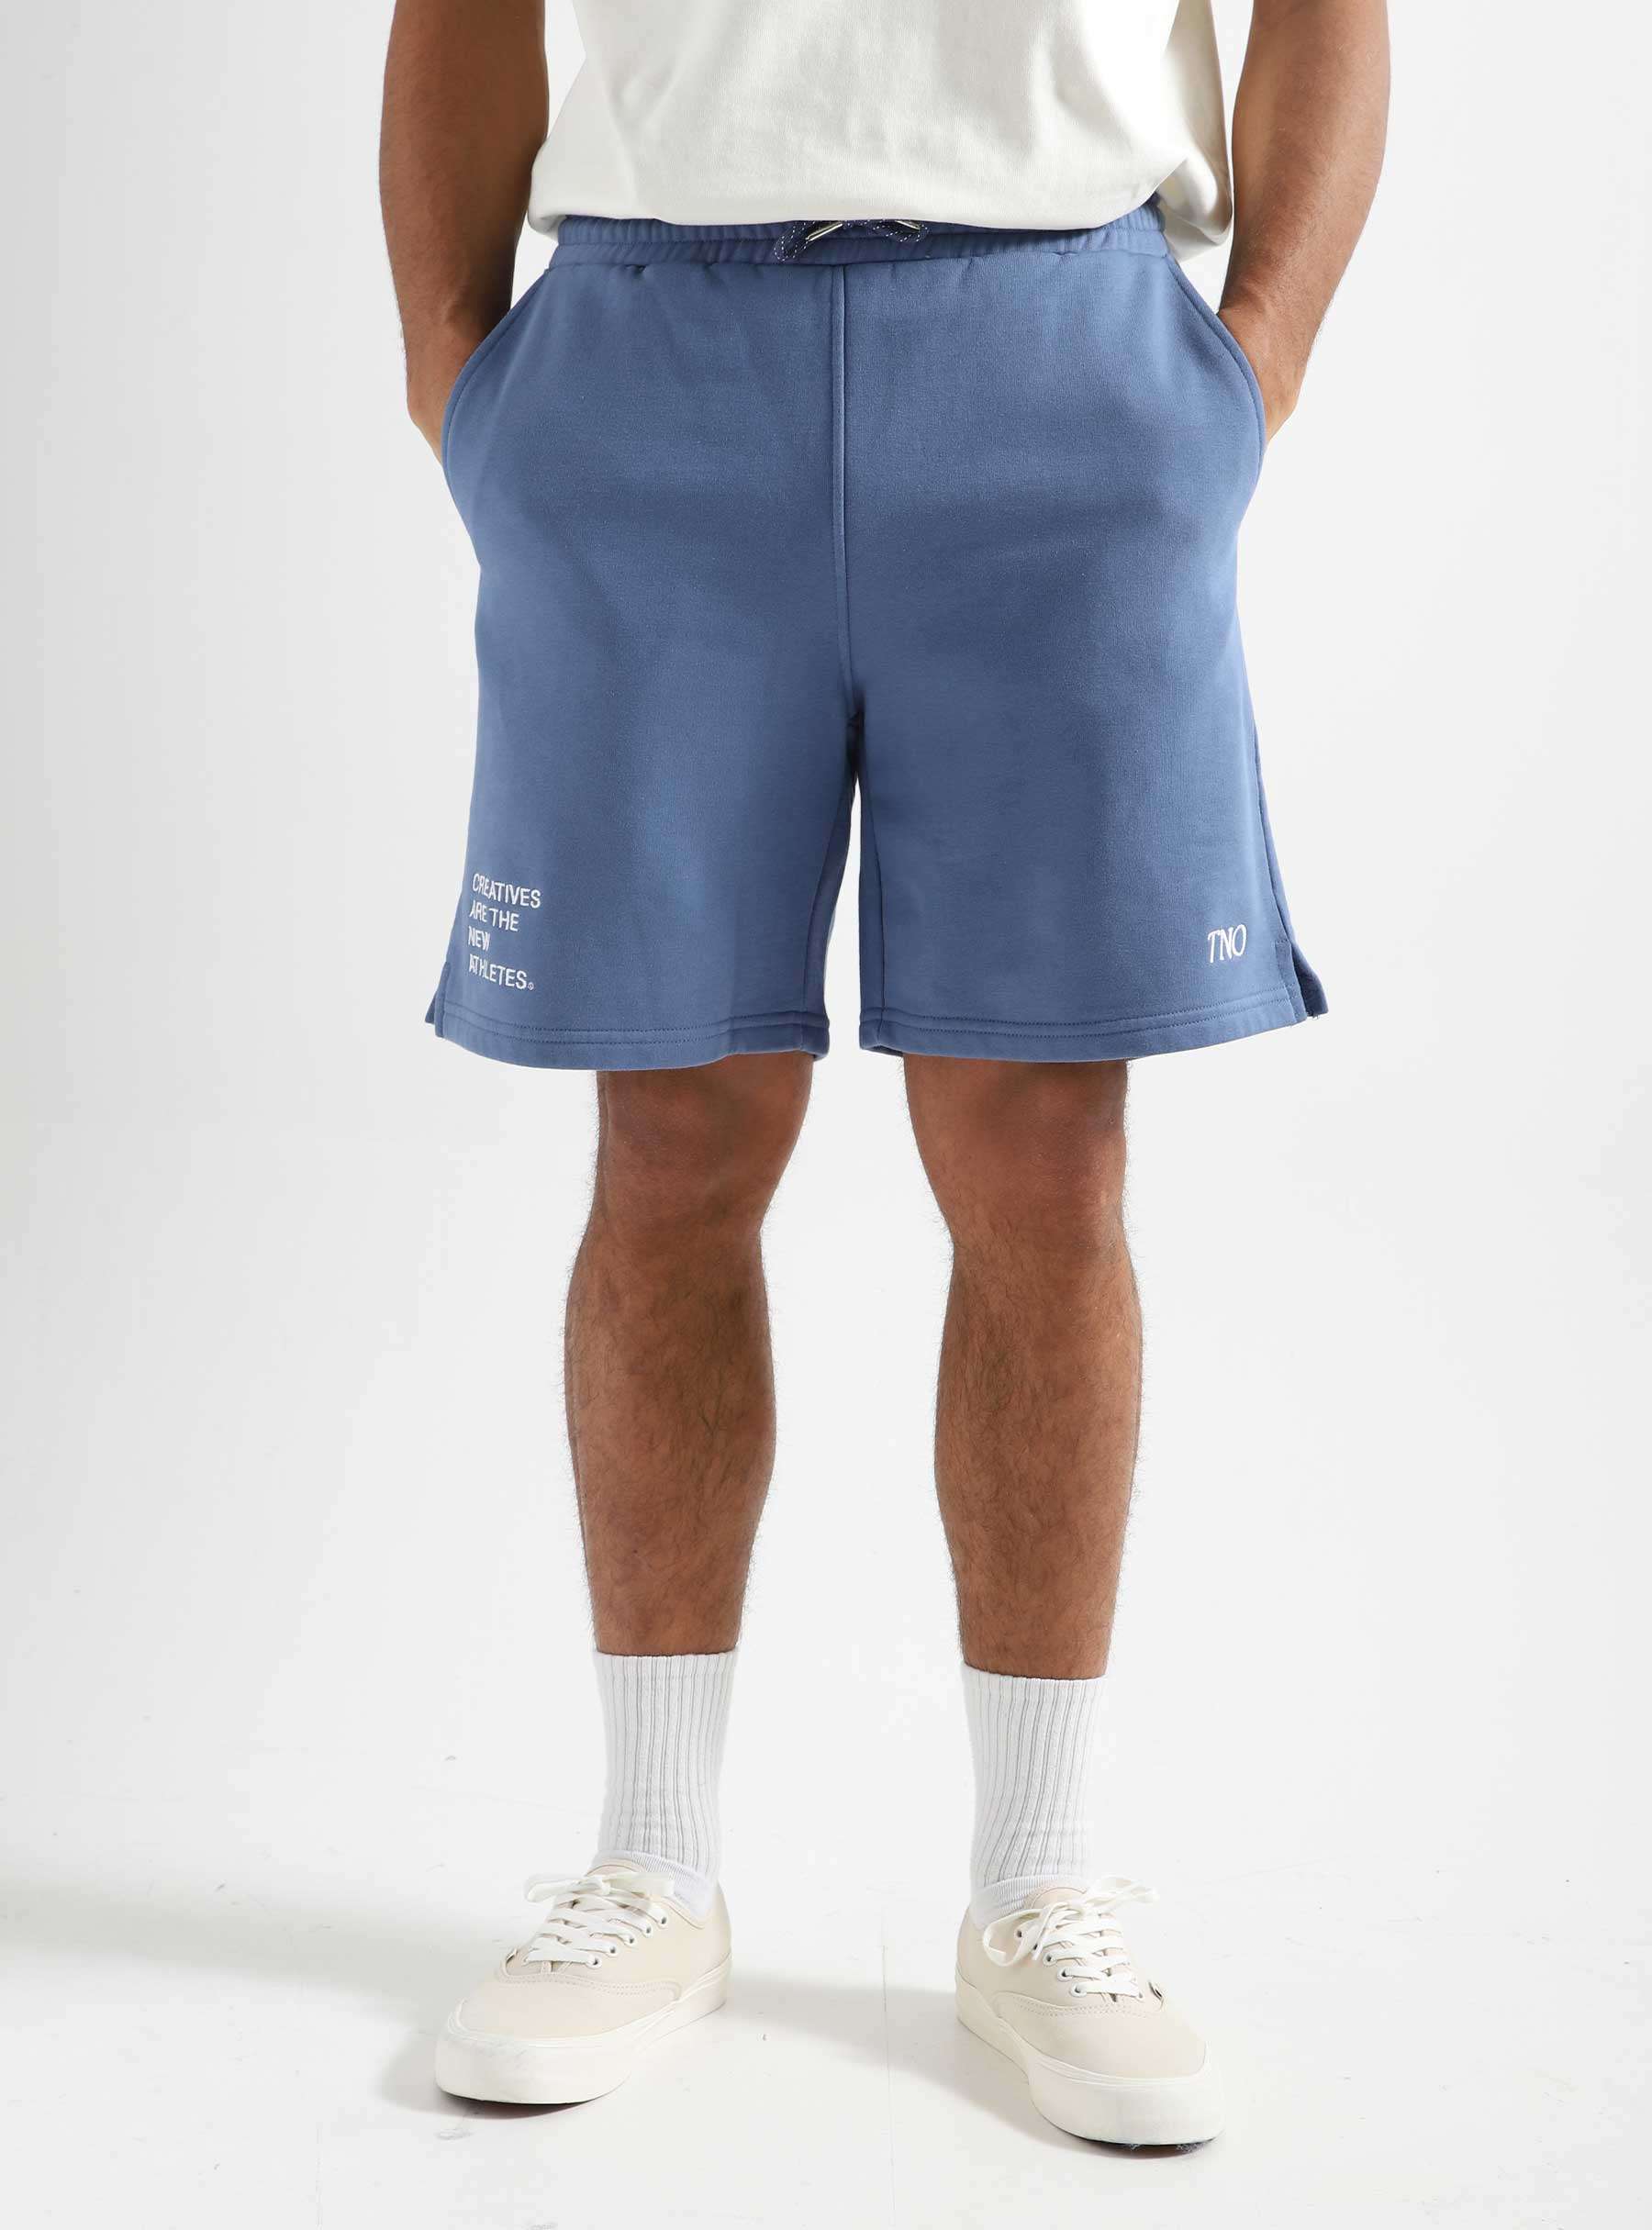 CATNA Sweat Shorts Bijou Blue 550CATS23.609